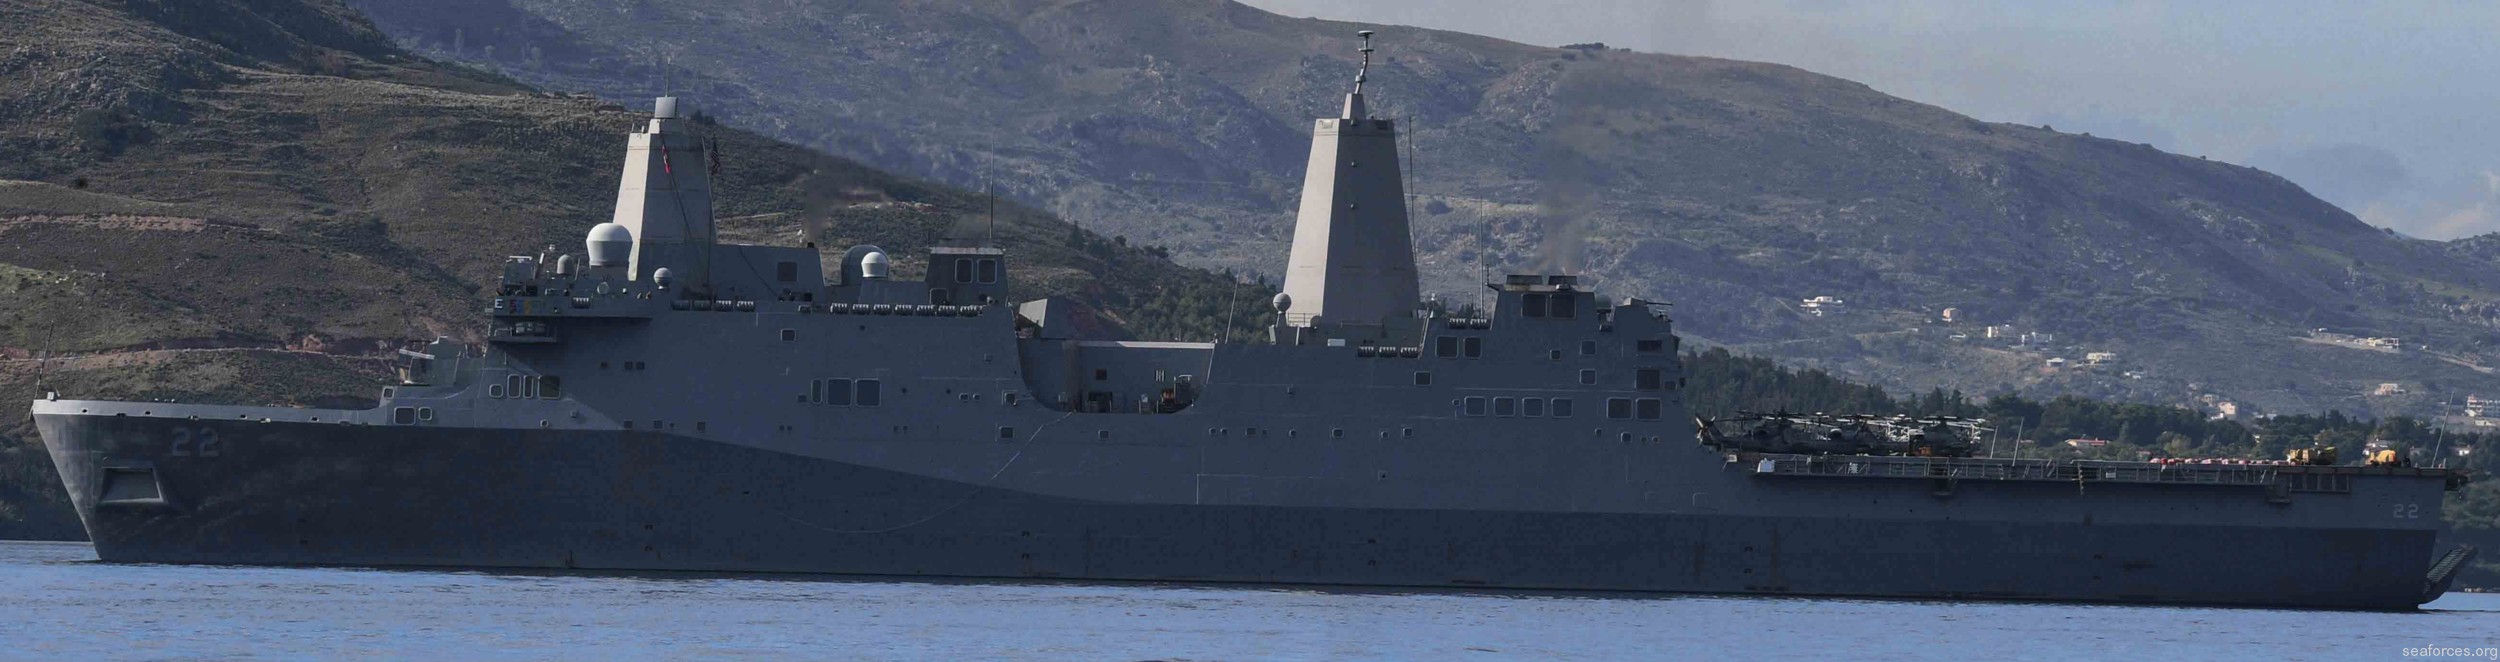 lpd-22 uss san diego san antonio class amphibious transport dock ship navy 13 souda bay crete greece